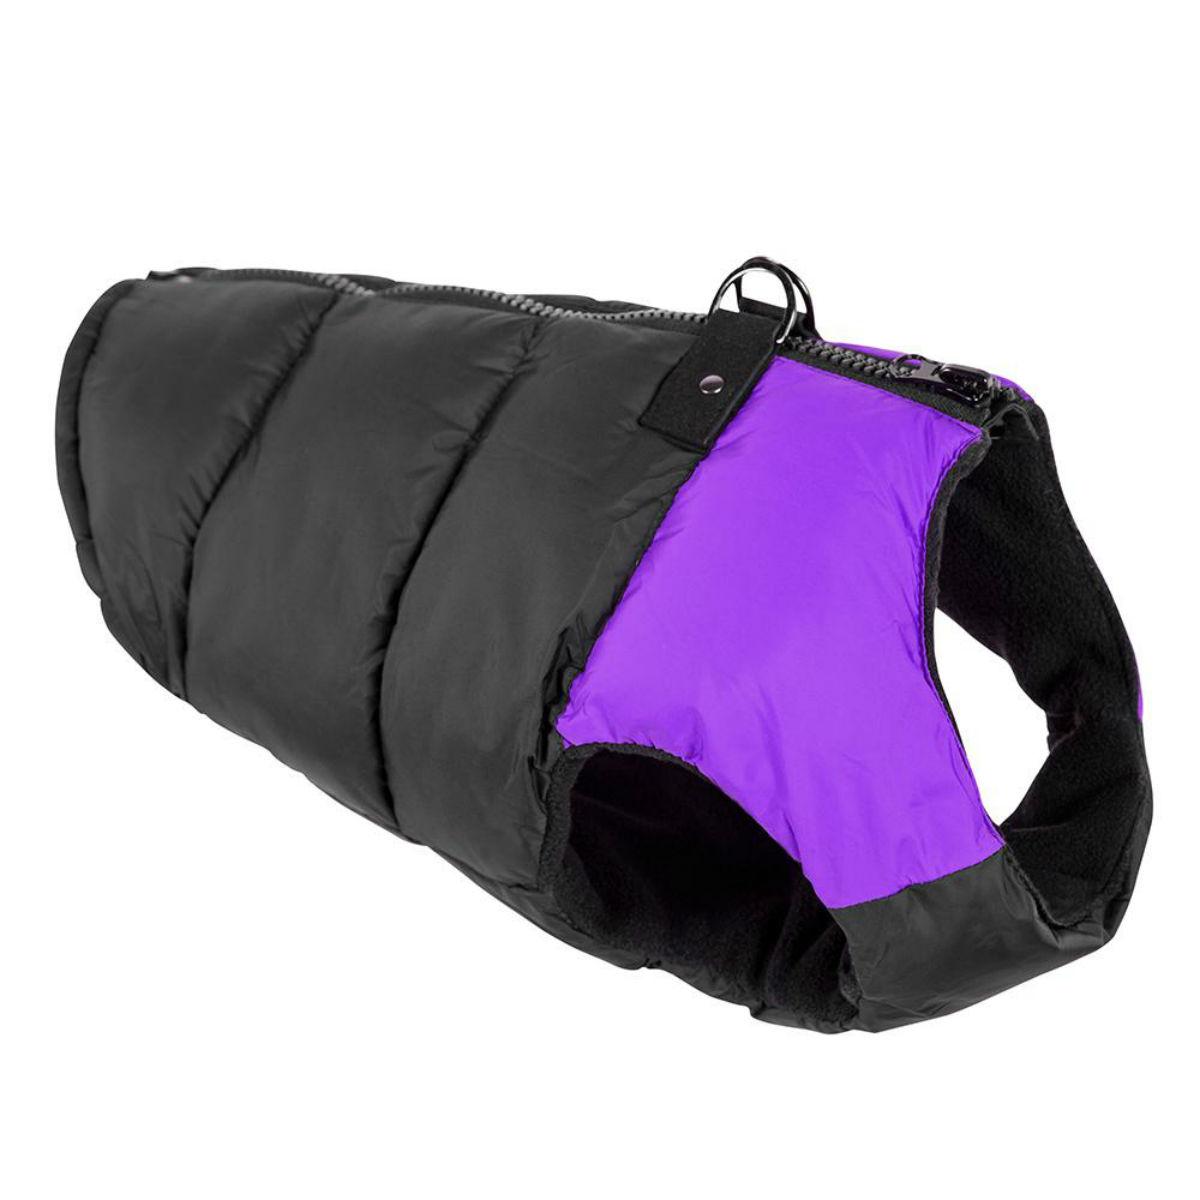 Padded Dog Harness Vest by Gooby - Purple/Black